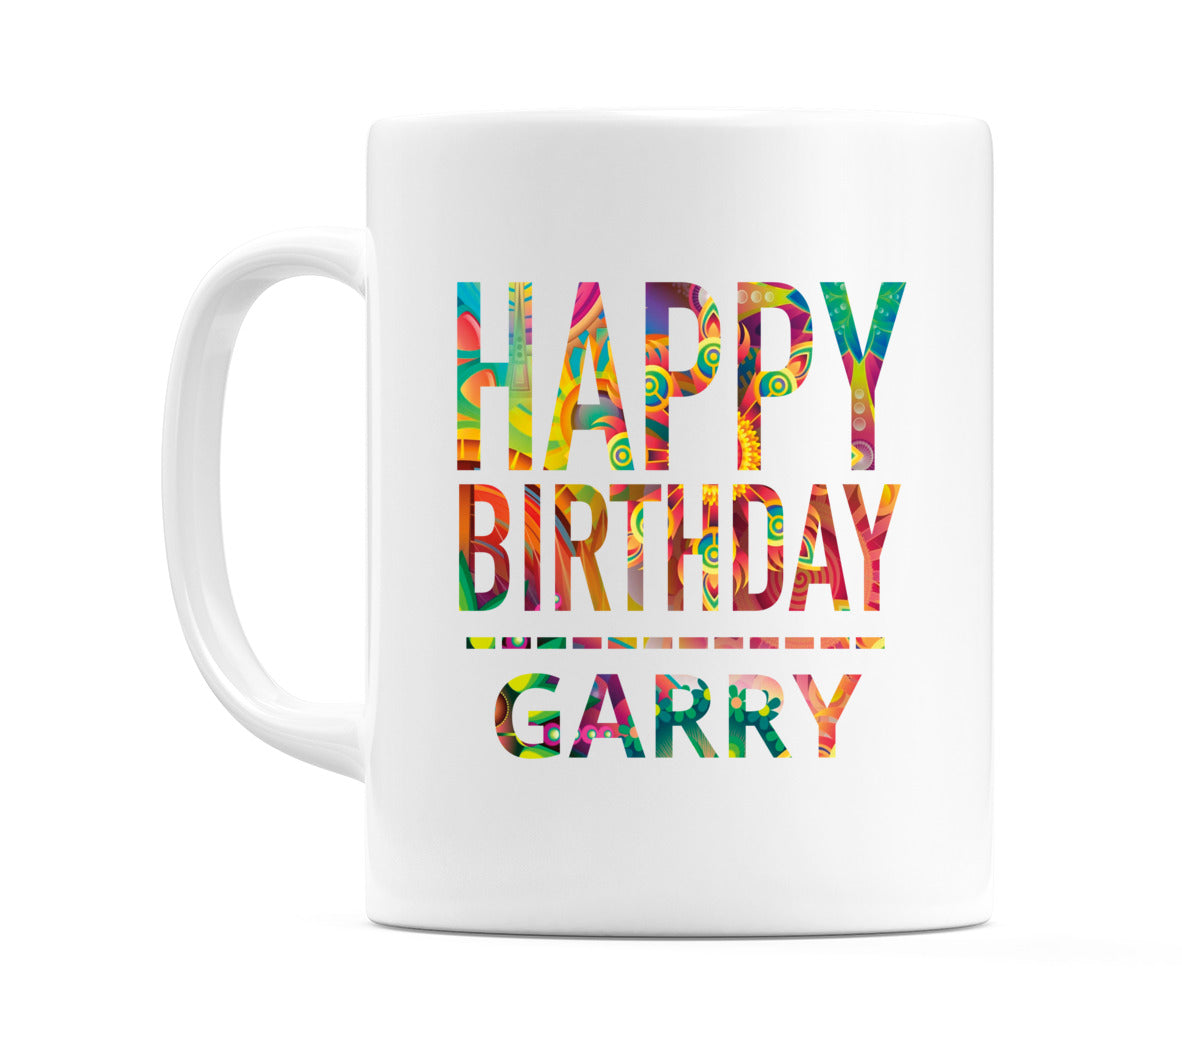 Happy Birthday Garry (Tie Dye Effect) Mug Cup by WeDoMugs